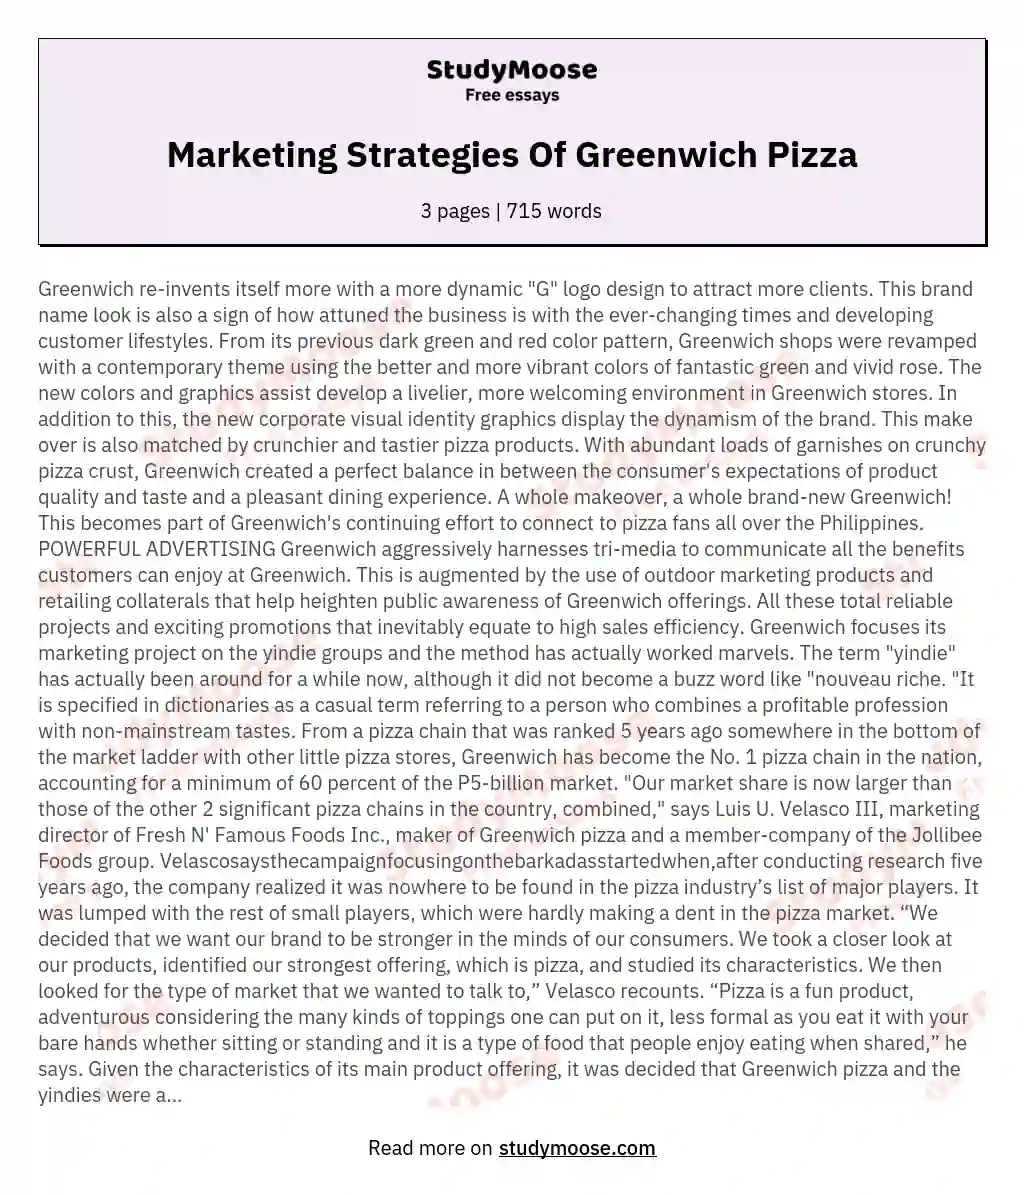 Marketing Strategies Of Greenwich Pizza essay